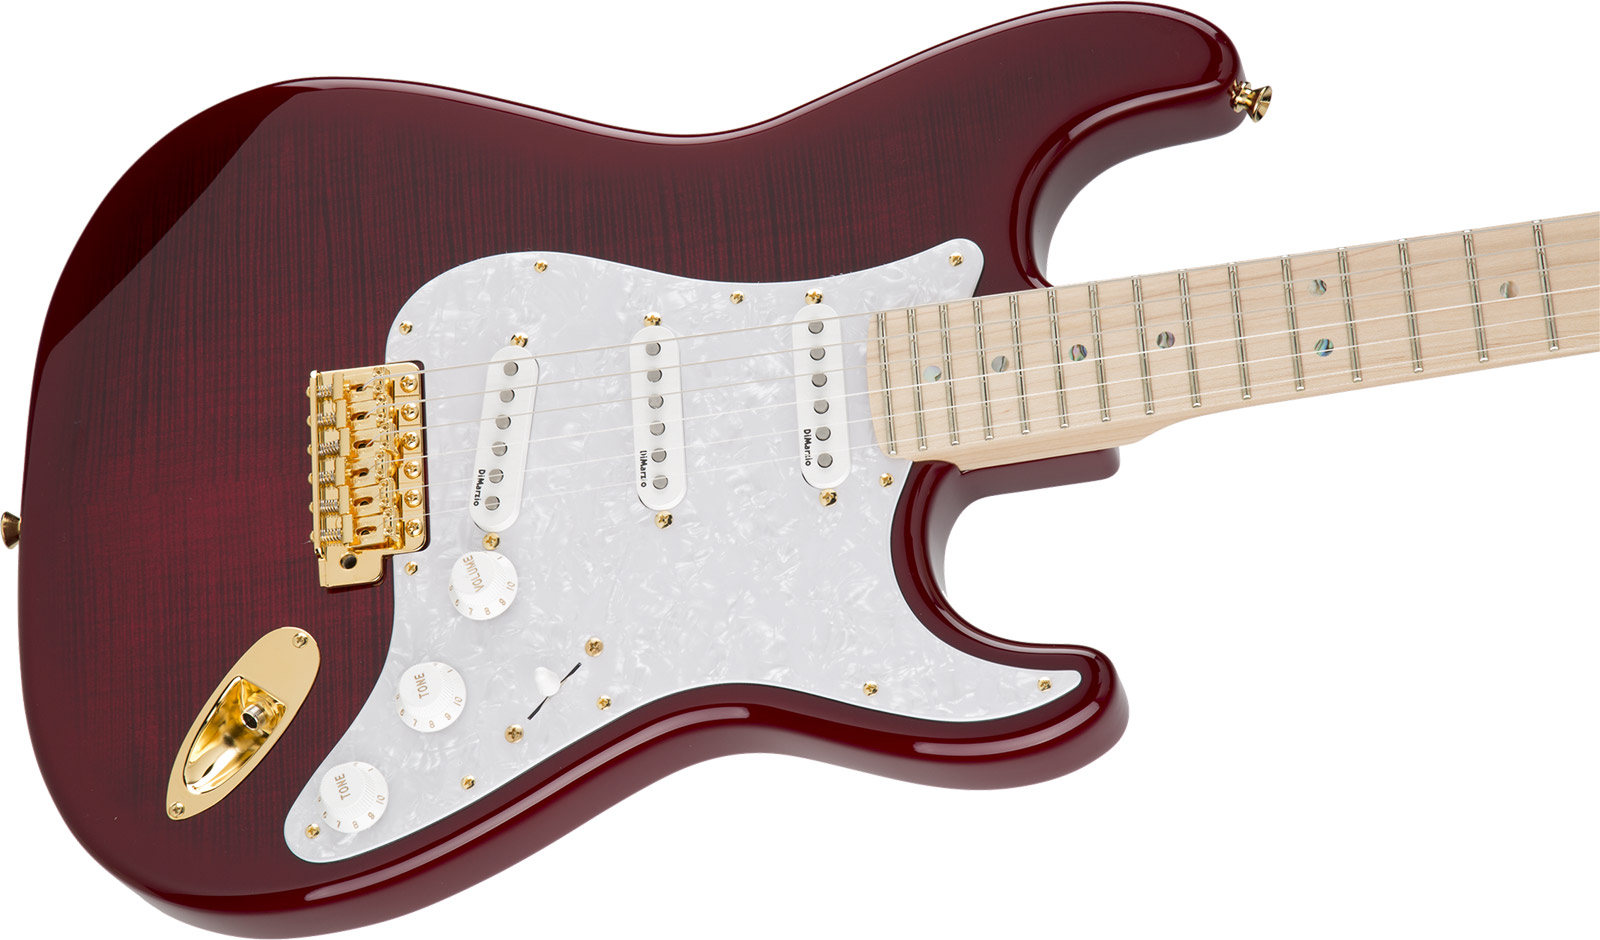 Fender Richie Kotzen Strat Japan Ltd 3s Mn - Transparent Red Burst - Str shape electric guitar - Variation 5